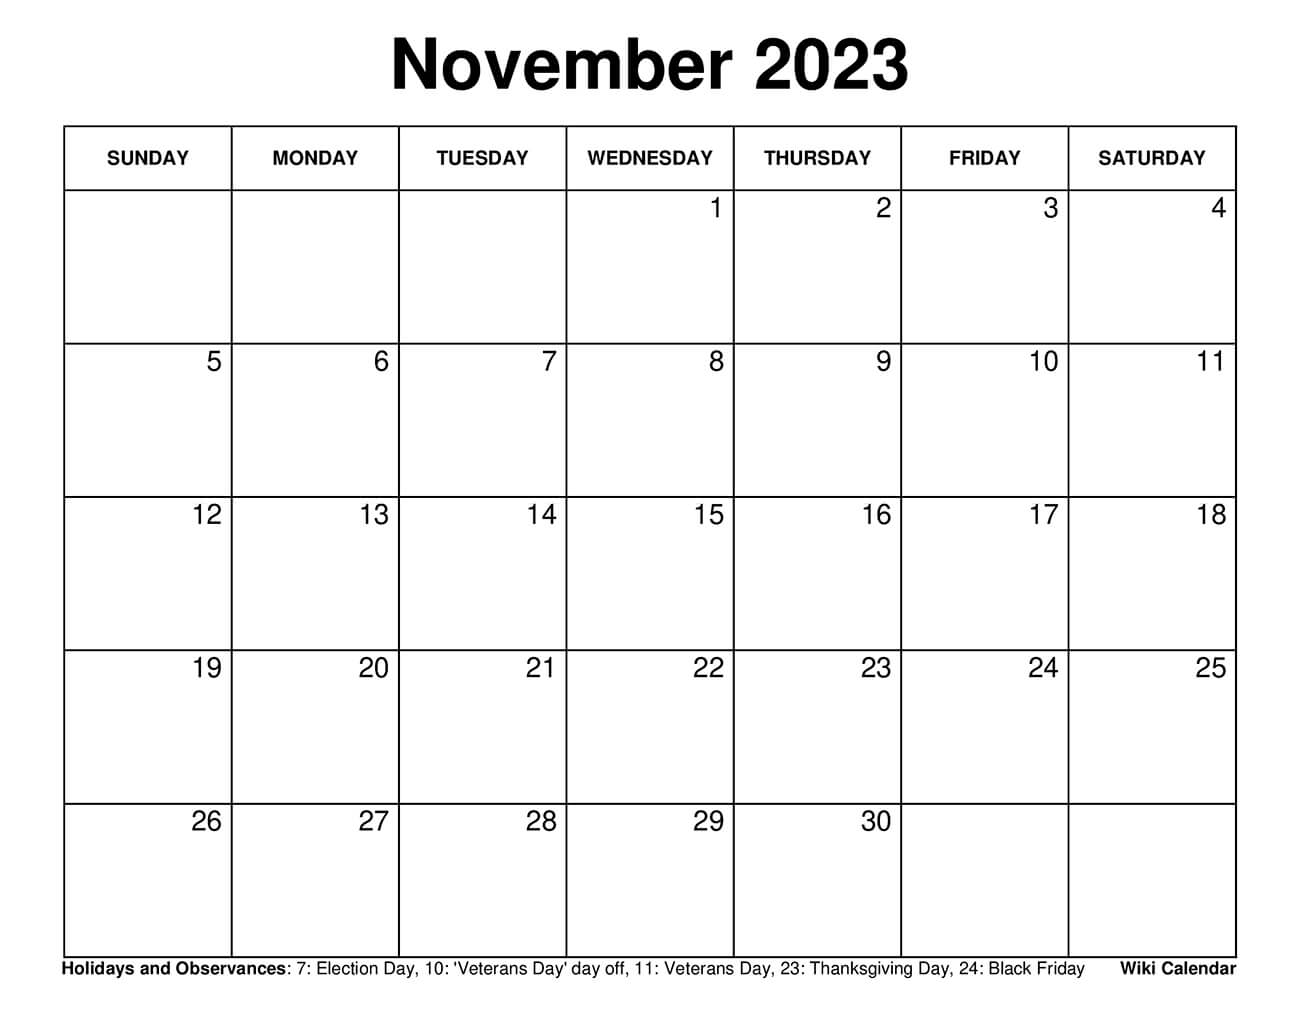 free-printable-november-2023-calendars-wiki-calendar